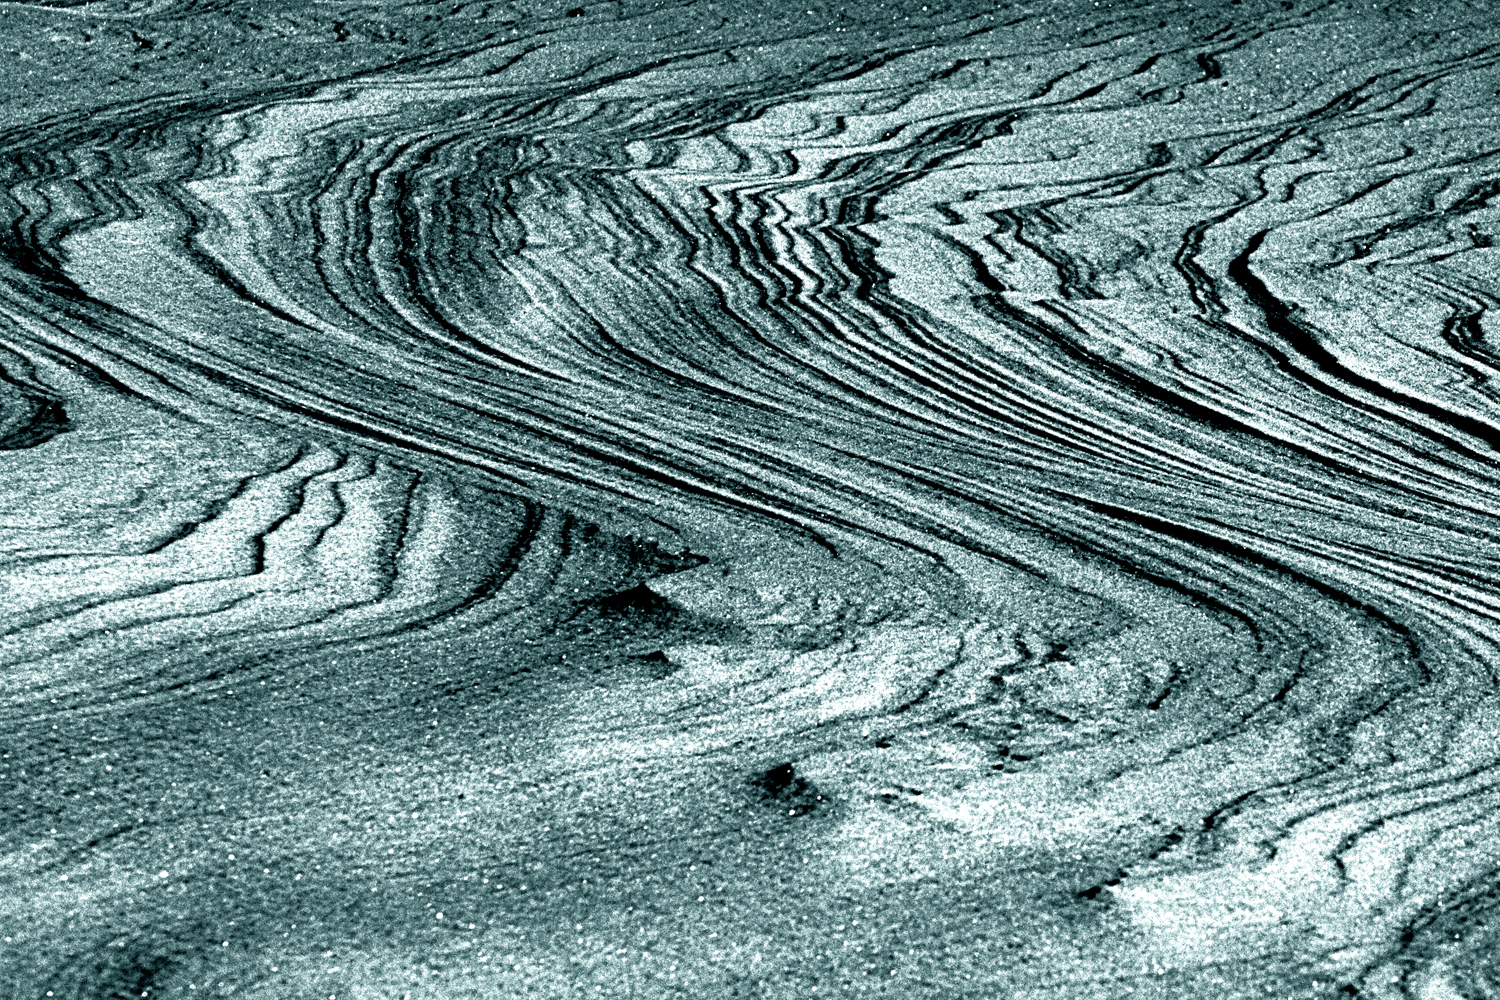 Figure 3 - Windblown ripples in the snow, 2013 (c) DEWolf